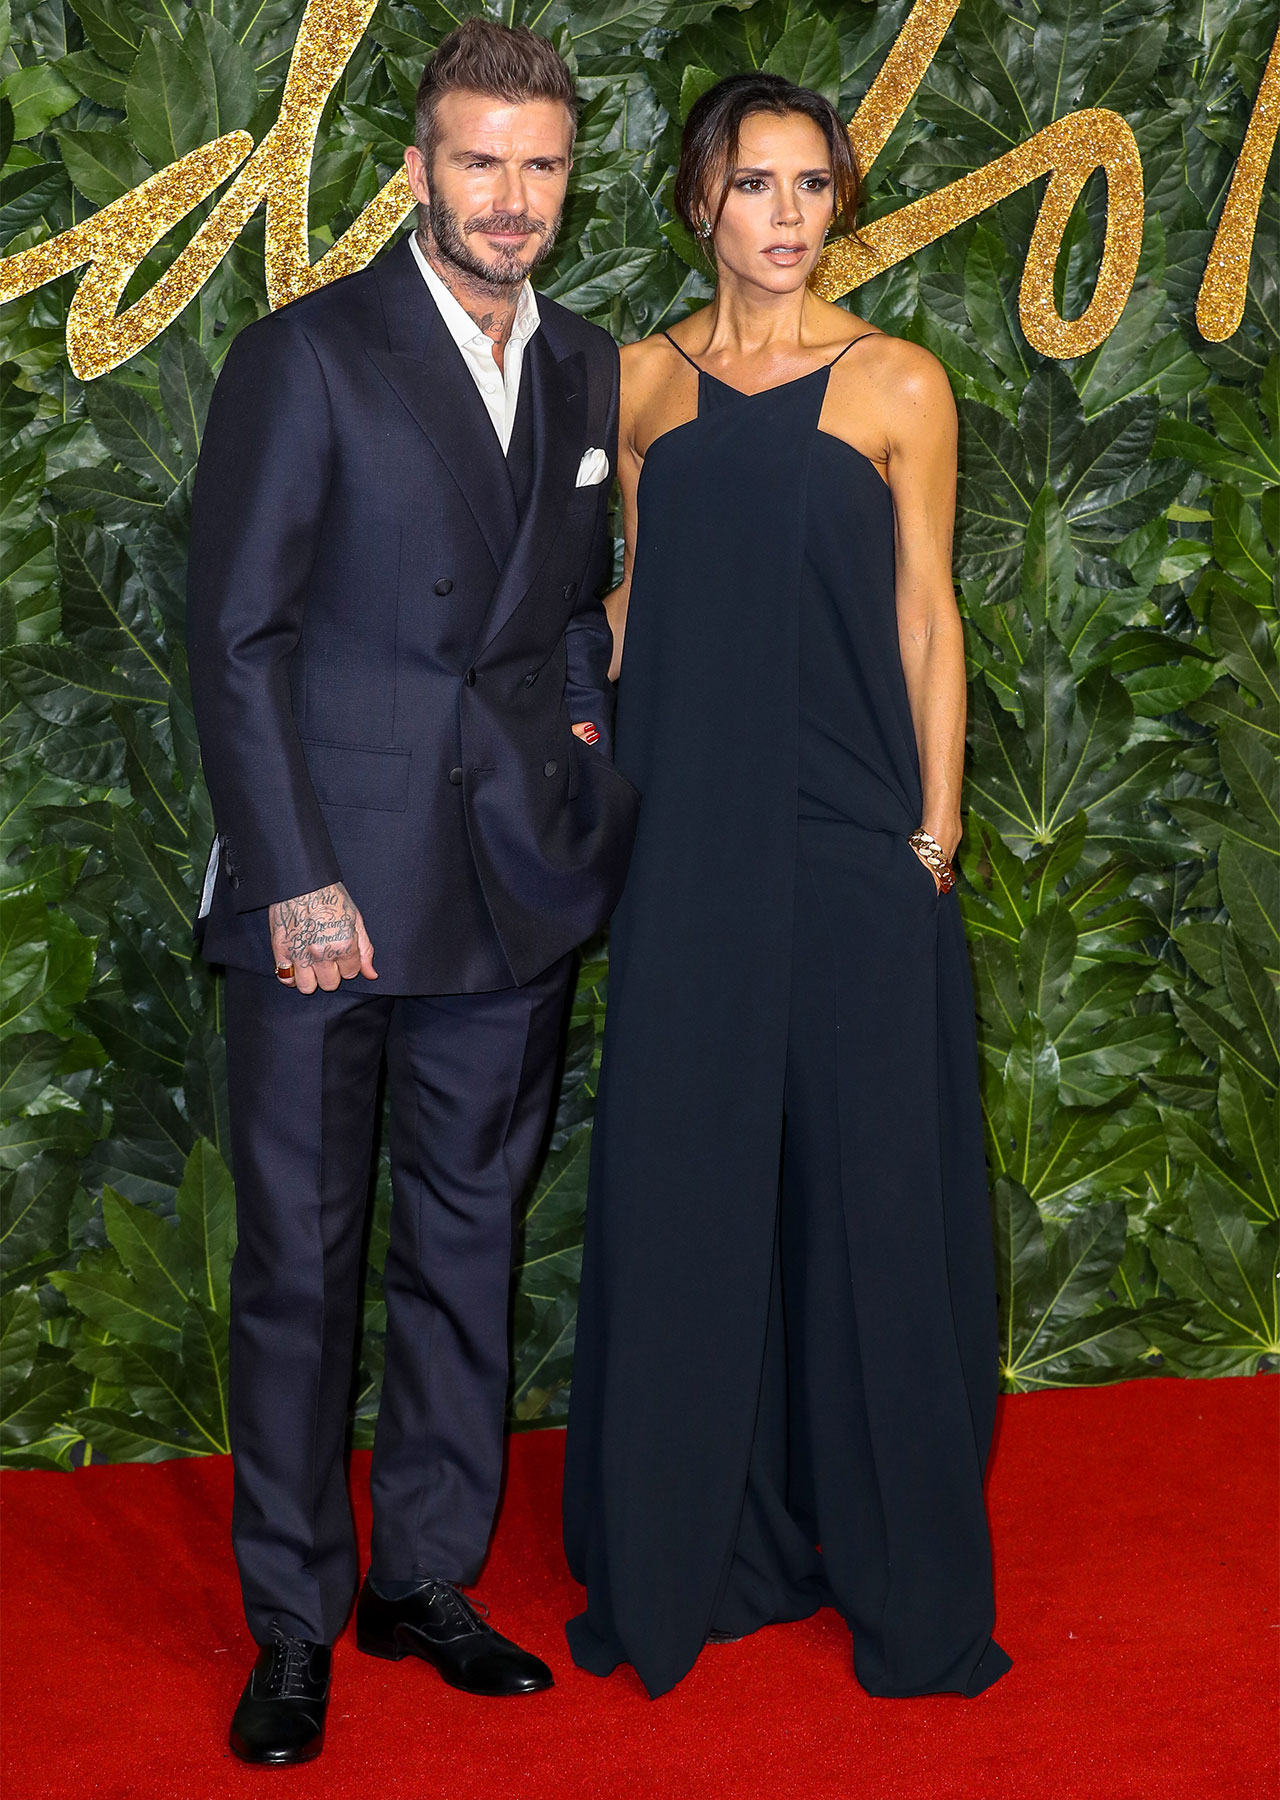 david beckham and victoria beckham at the fashion awards in 2018